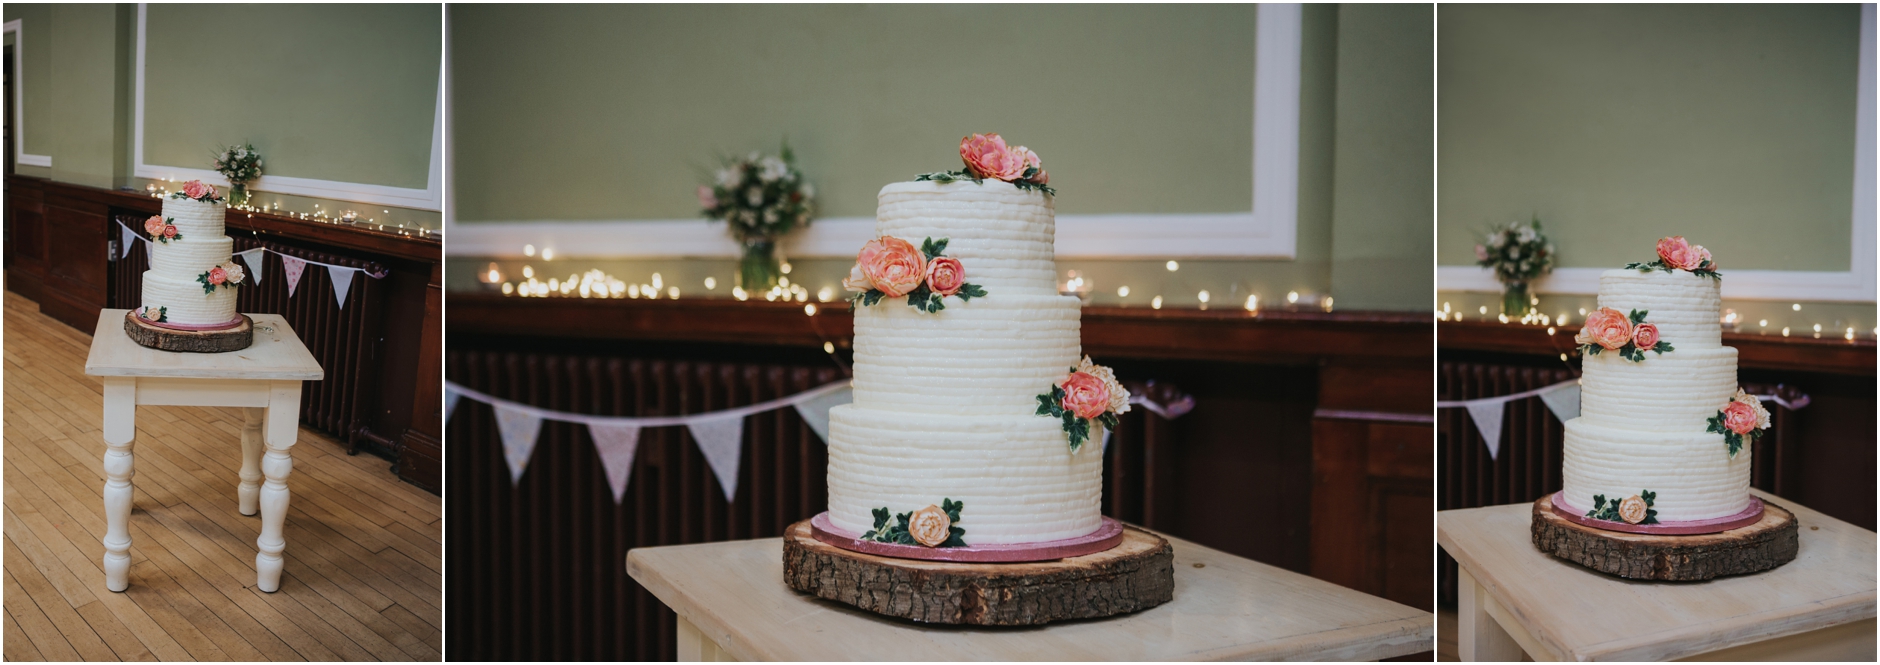 wedding cake thomas morton hall edinburgh